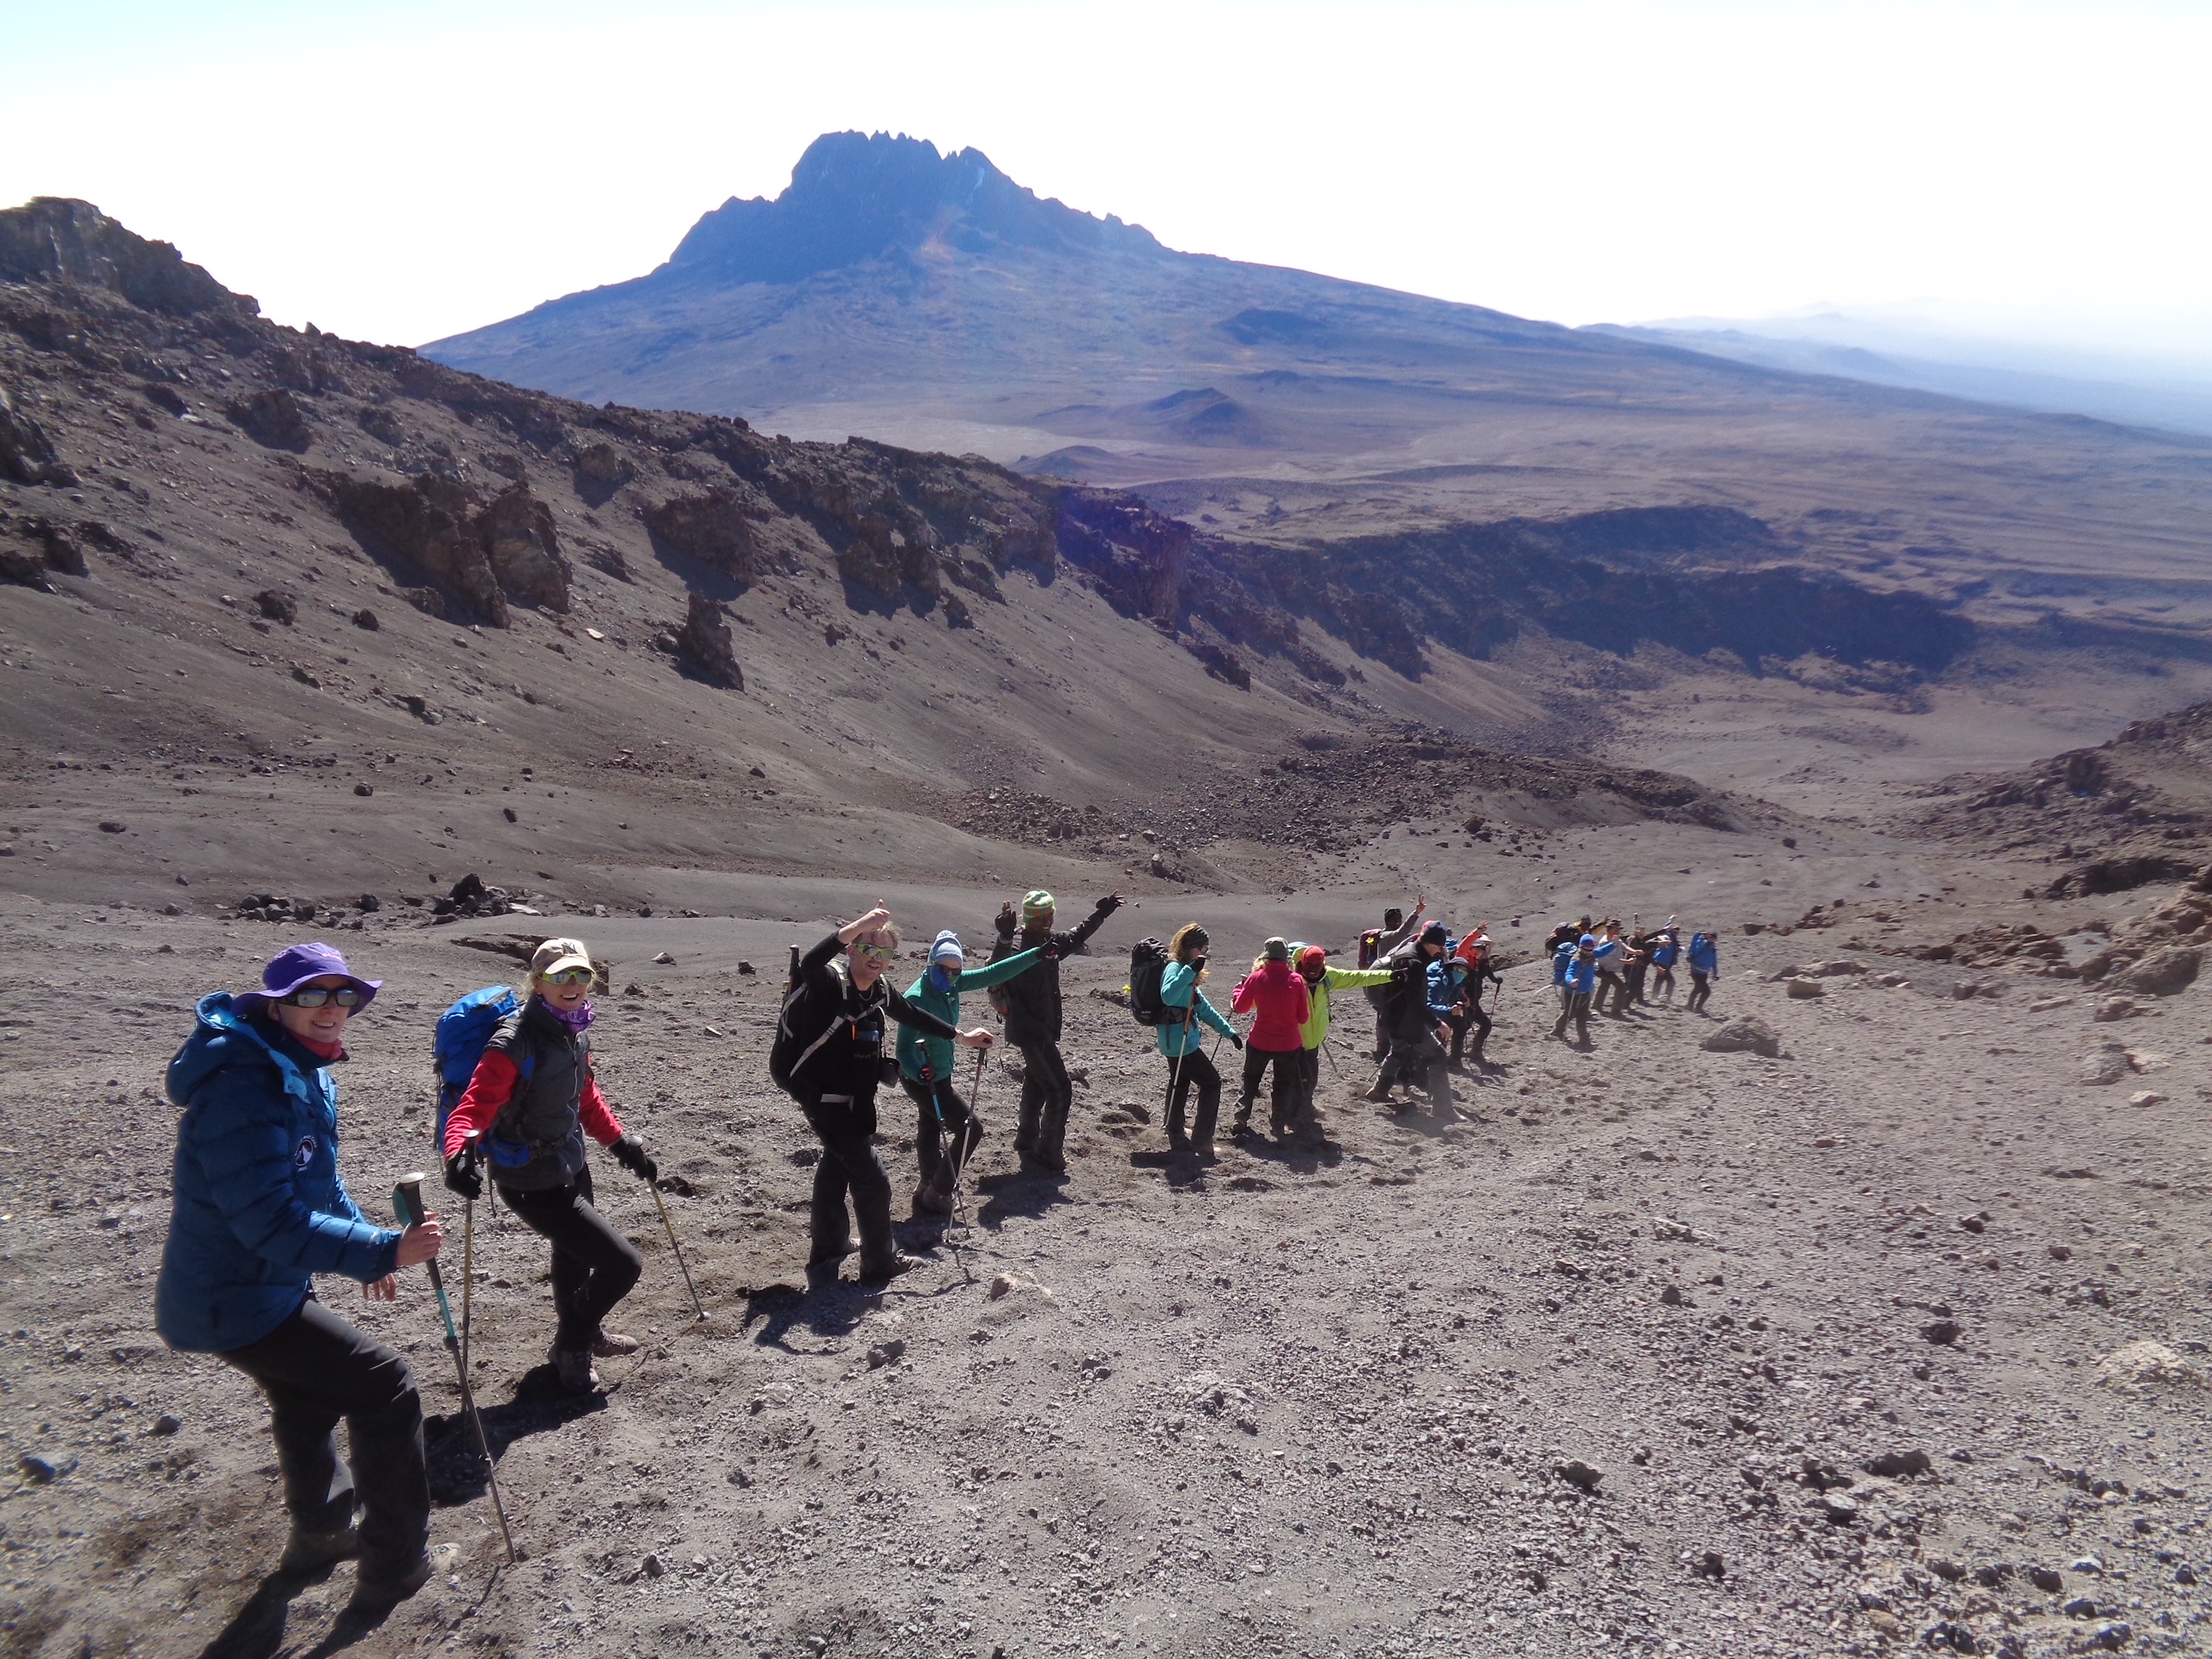 The long hike down Kilimanjaro